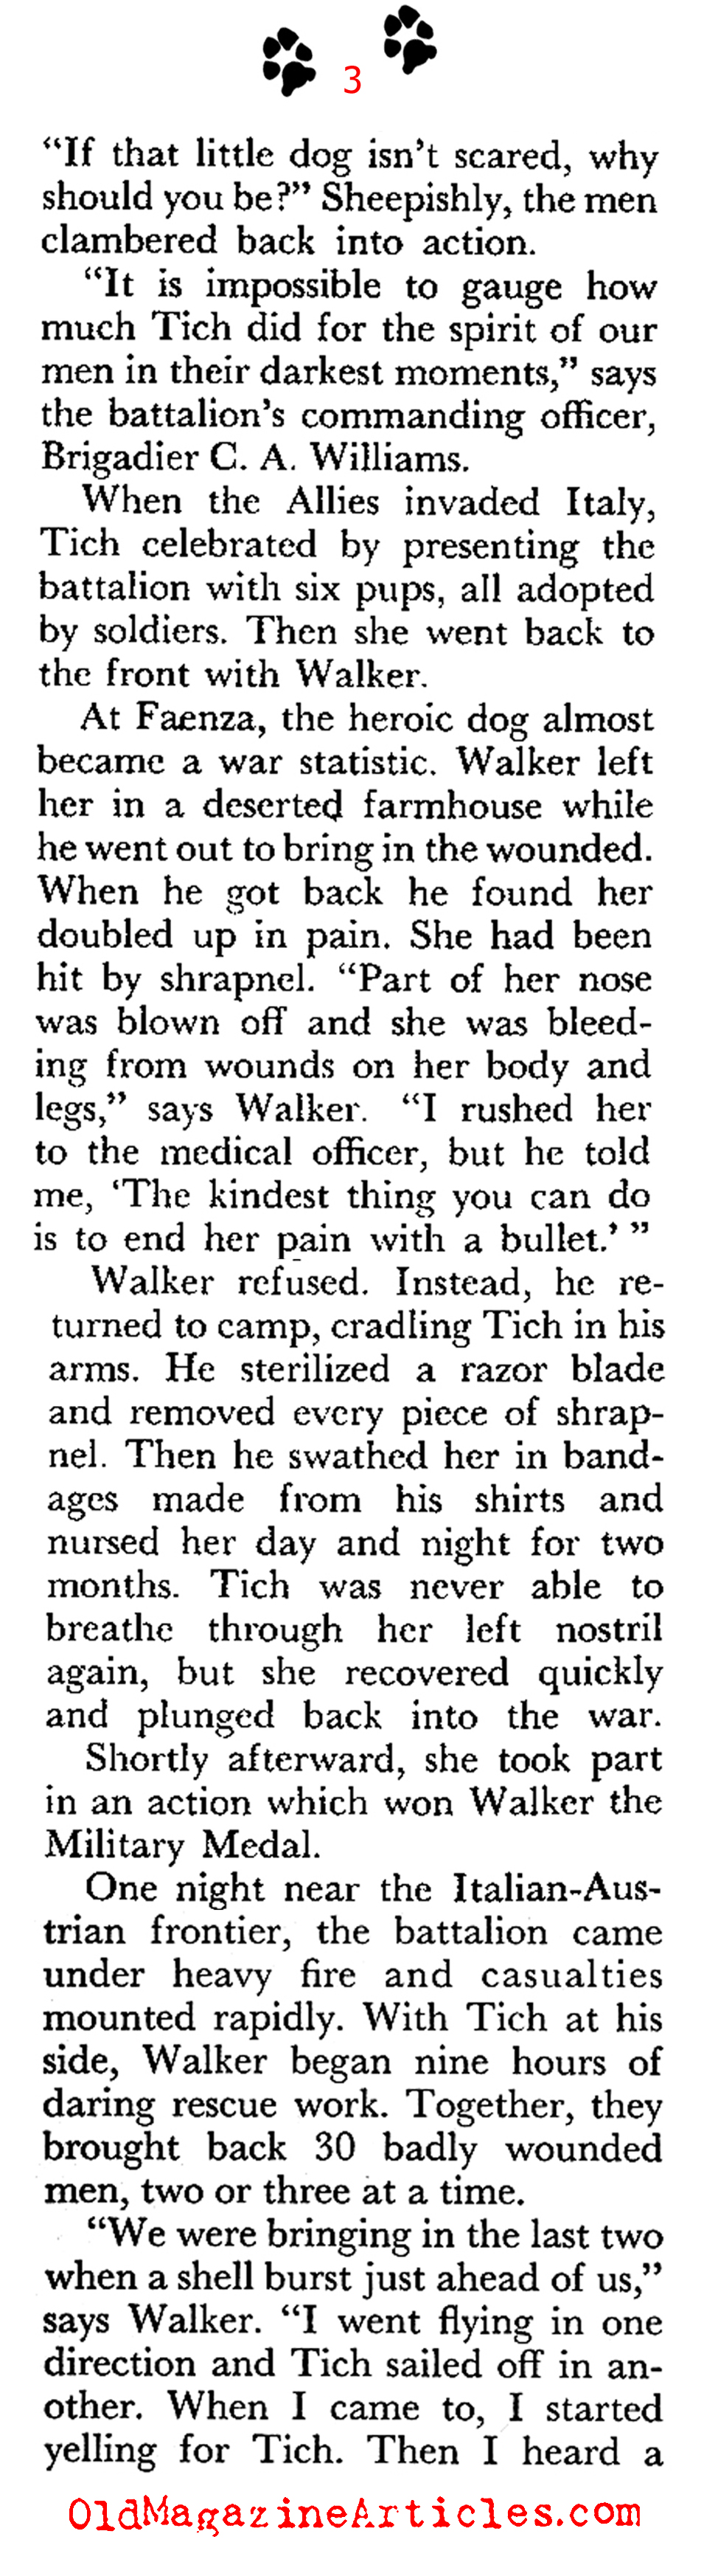 ''Tich'' of El Alamein (Coronet Magazine, 1960)